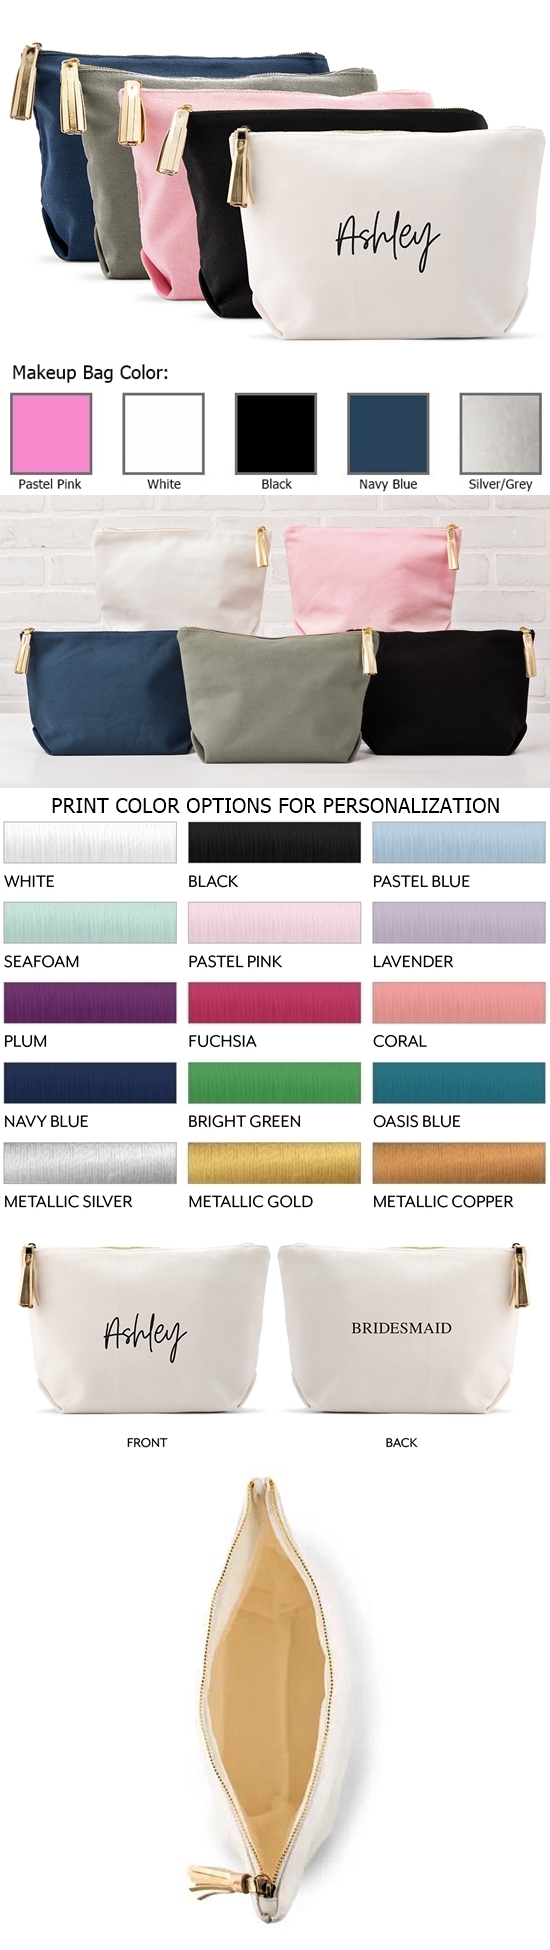 Large Personalized Canvas Makeup Bag with Script Font Name (5 Colors)